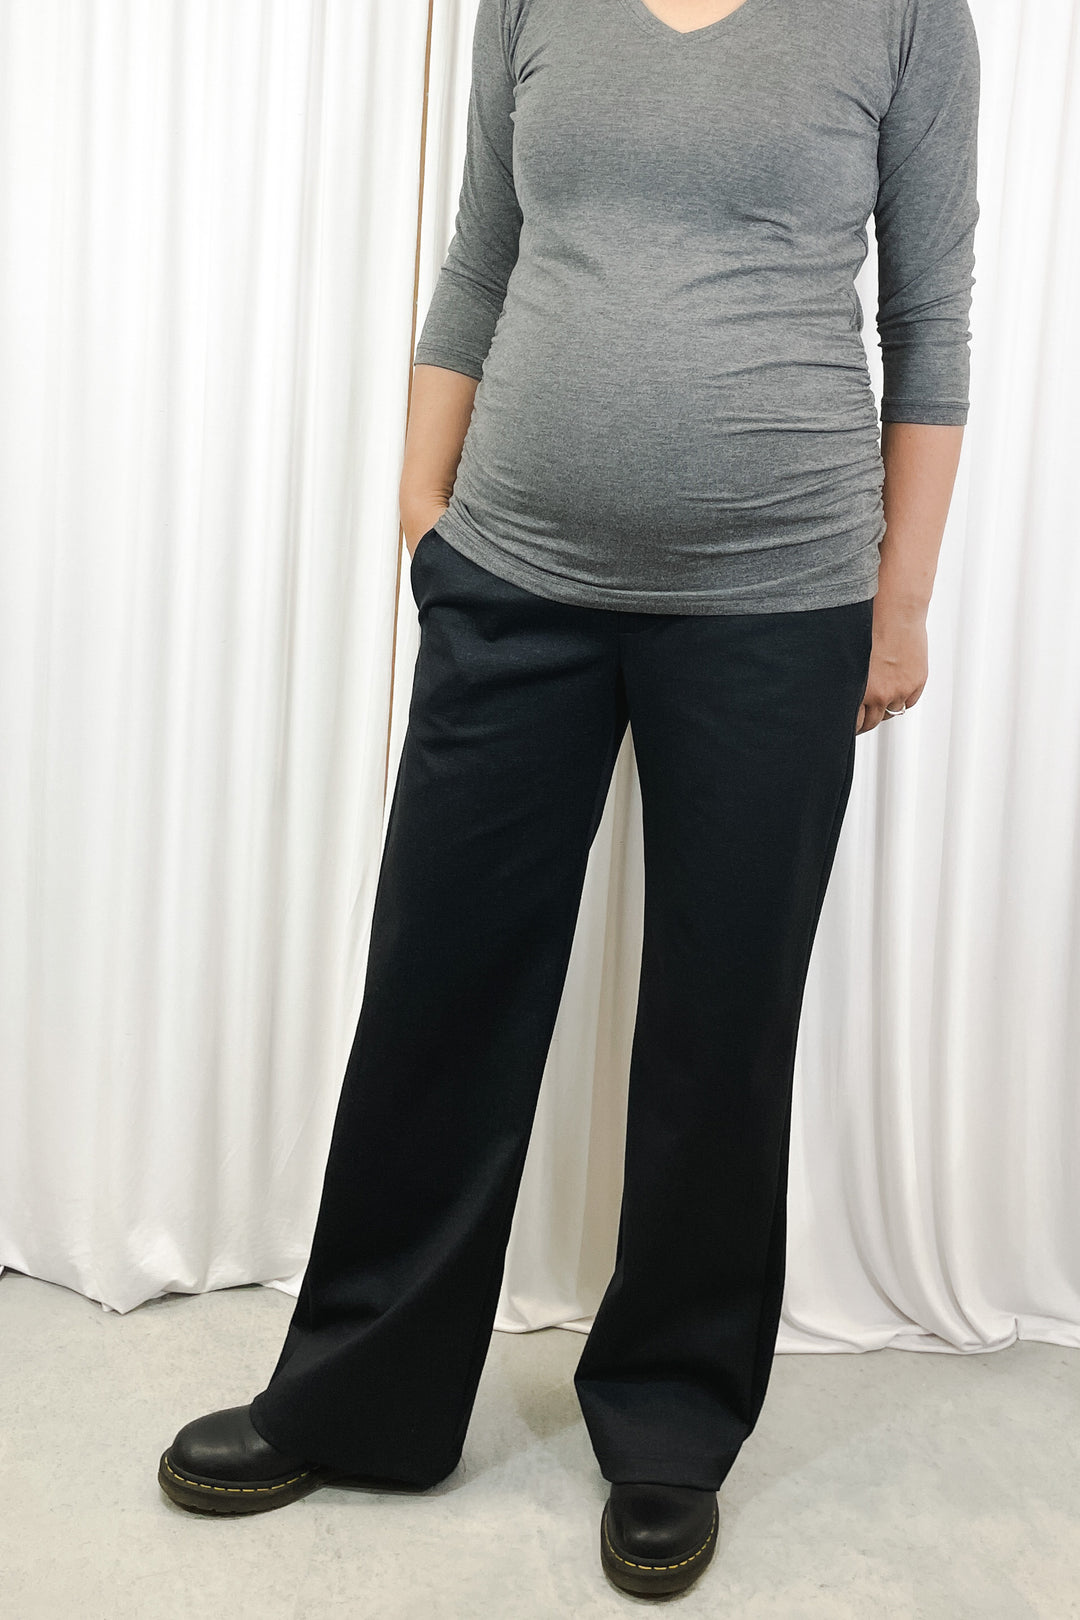 Pantalon Maternité Florence - Denim bleu foncé